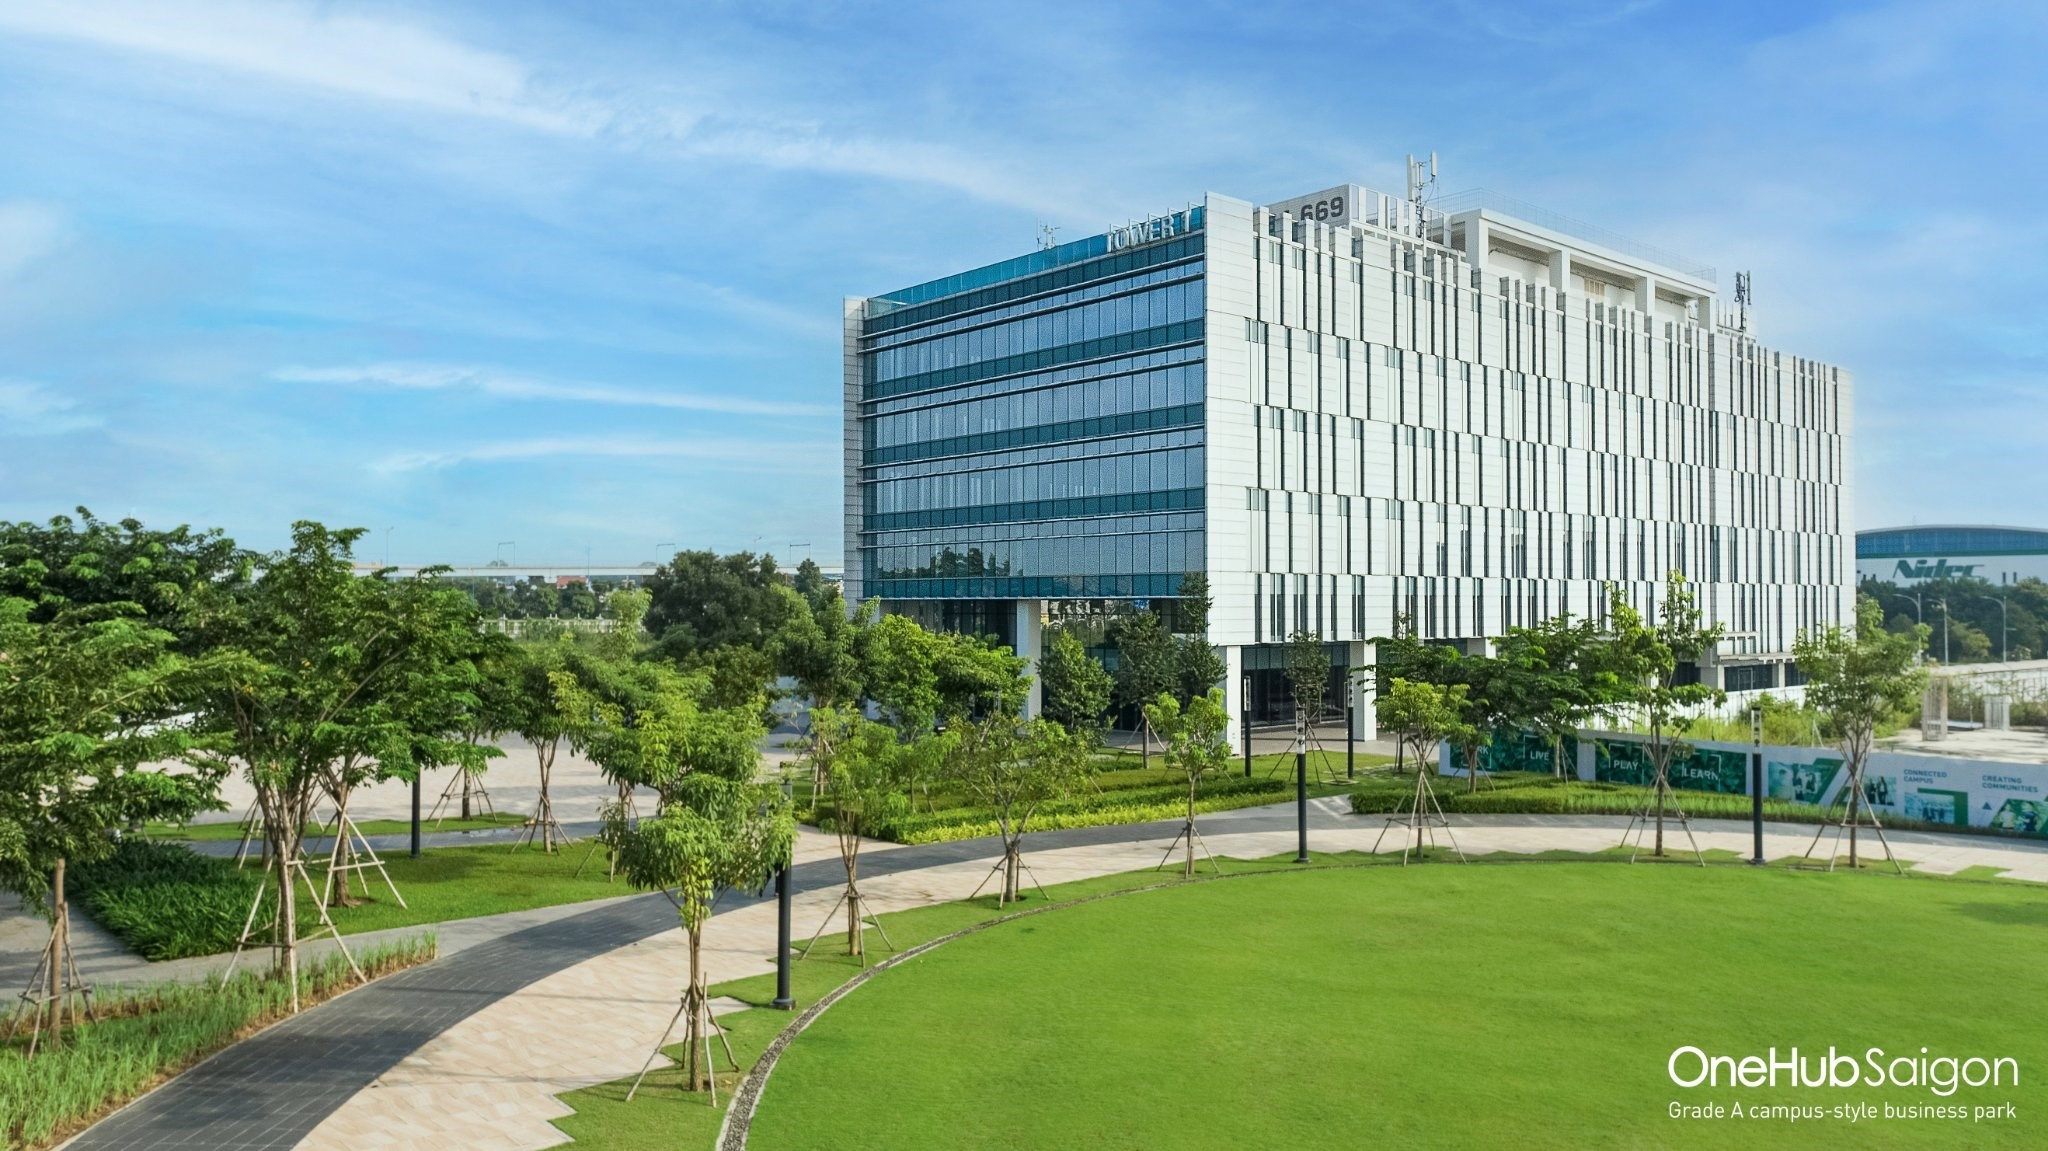 OneHub Saigon offers ideal office destination for new tech firms